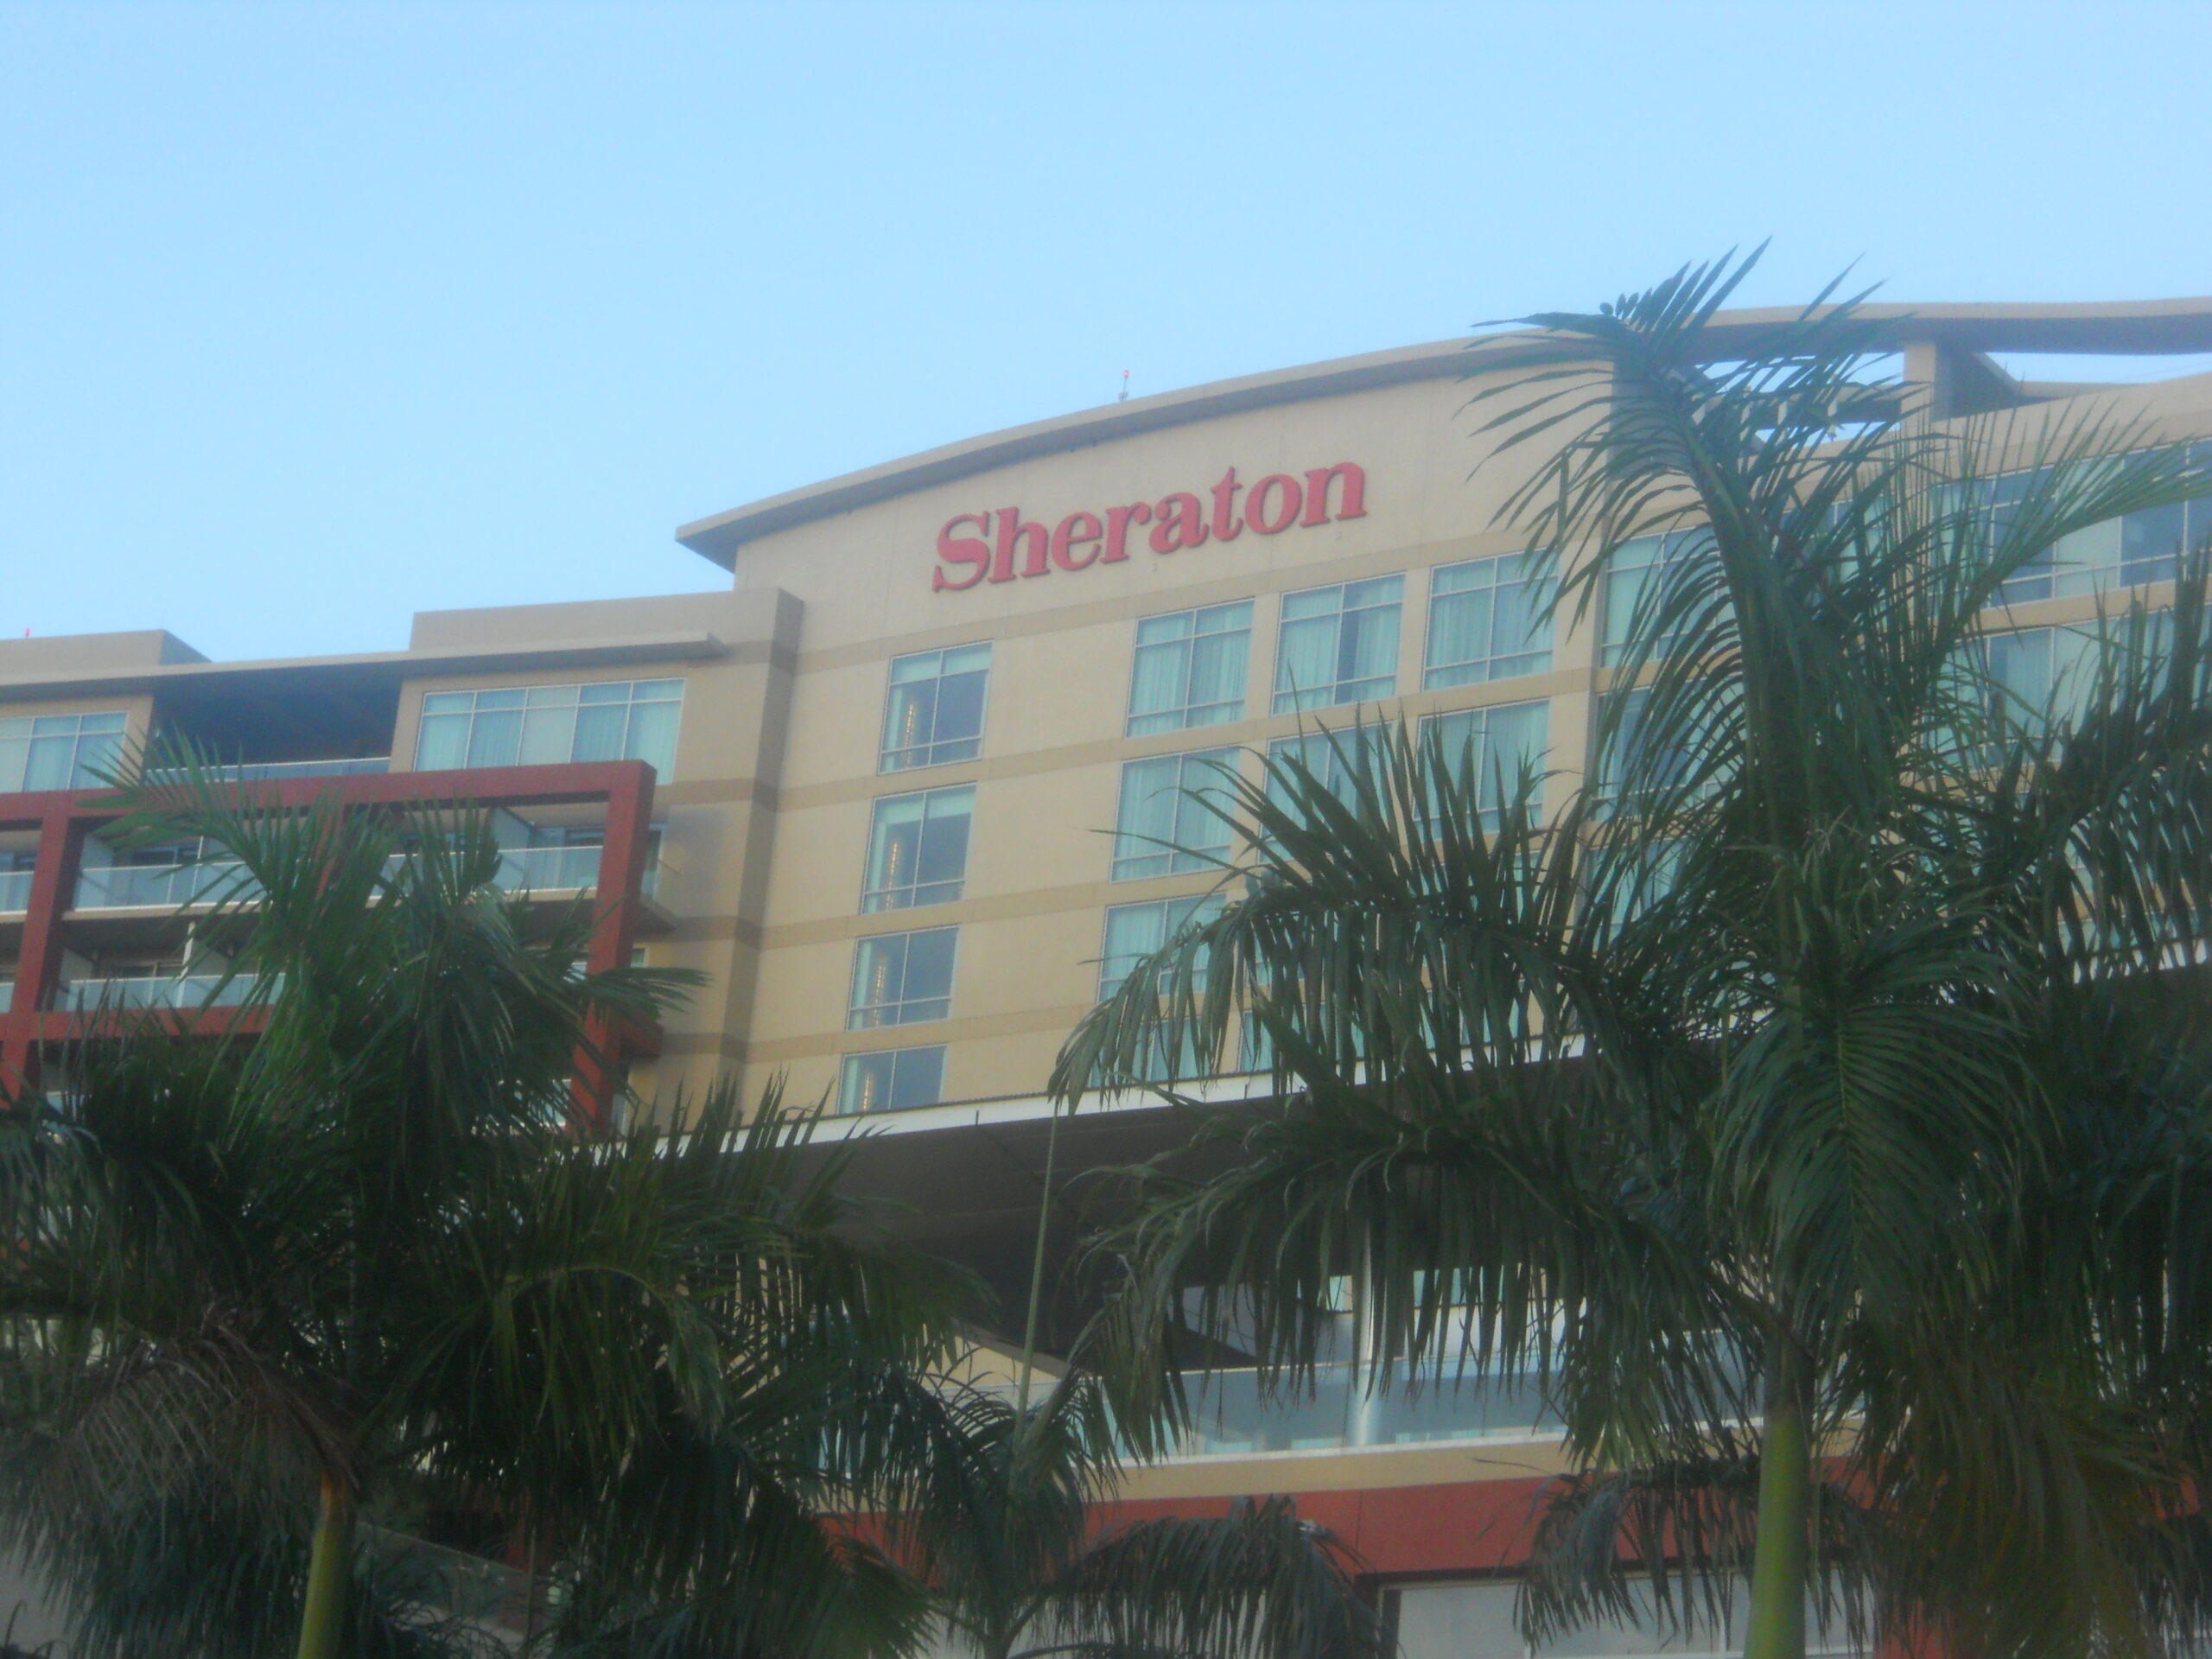 Sheraton Puerto Rico Hotel and Casino